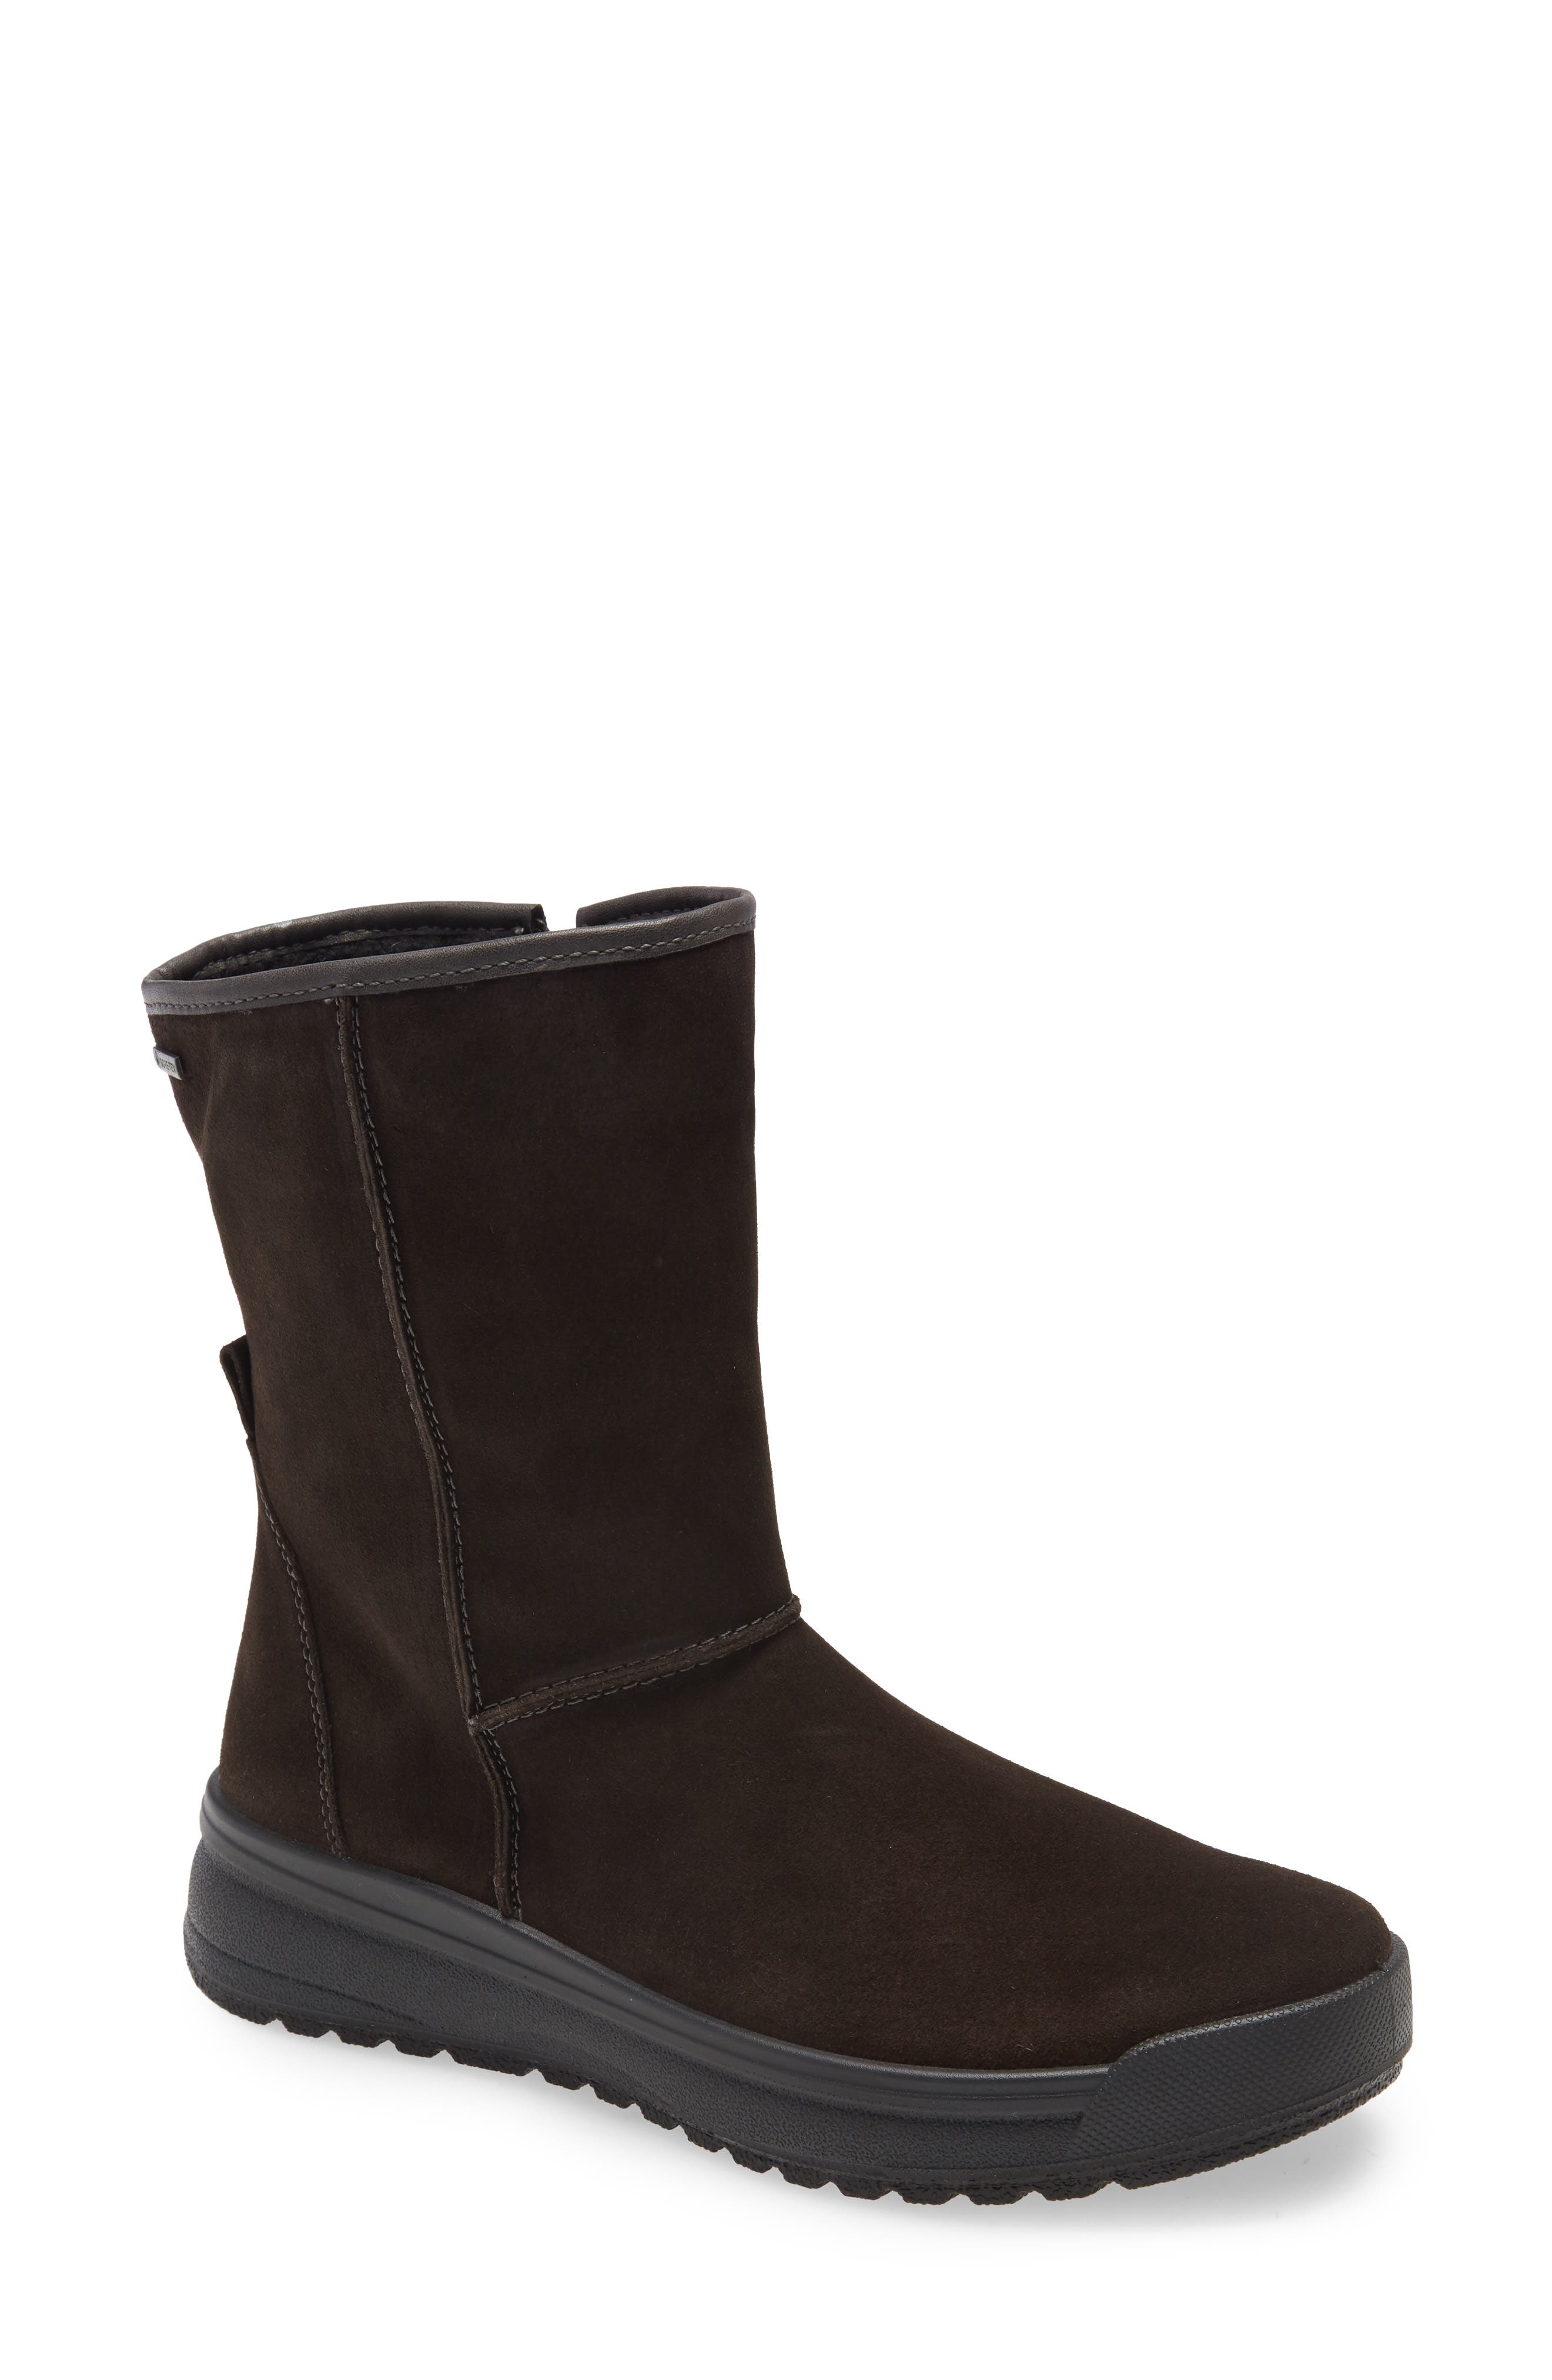 ara waterproof boots